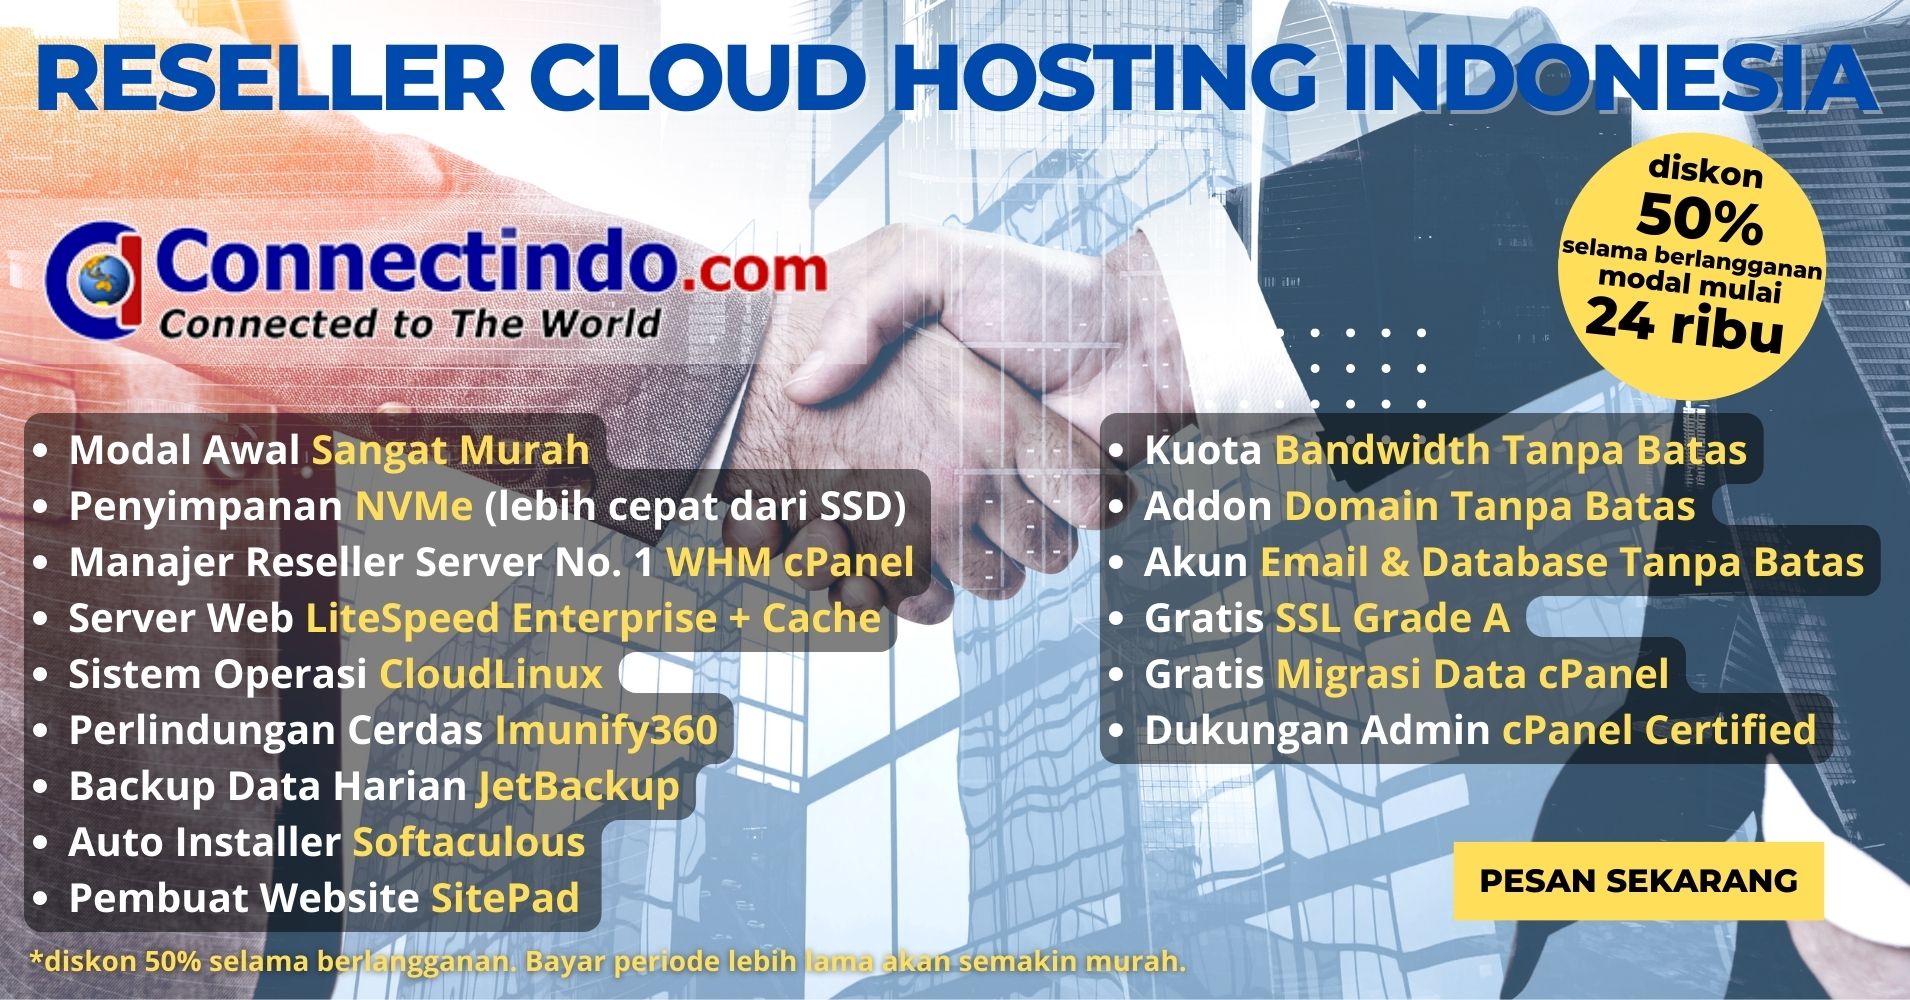 reseller-hosting-indonesia-50.jpg